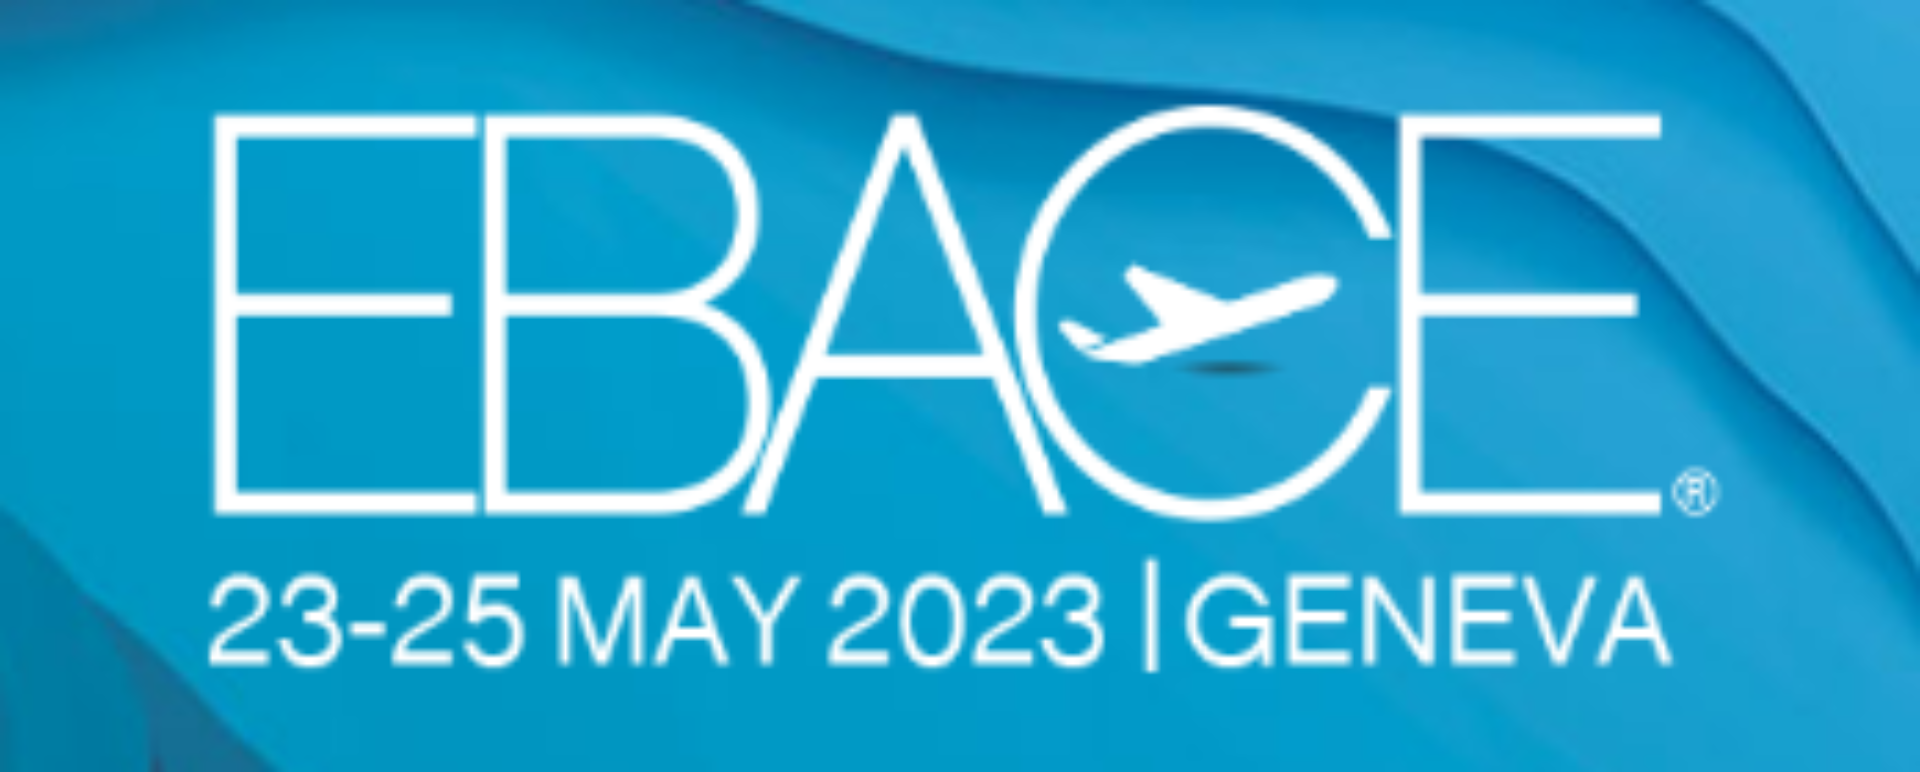 ebace 2023 EBAA European Business Aviation Association